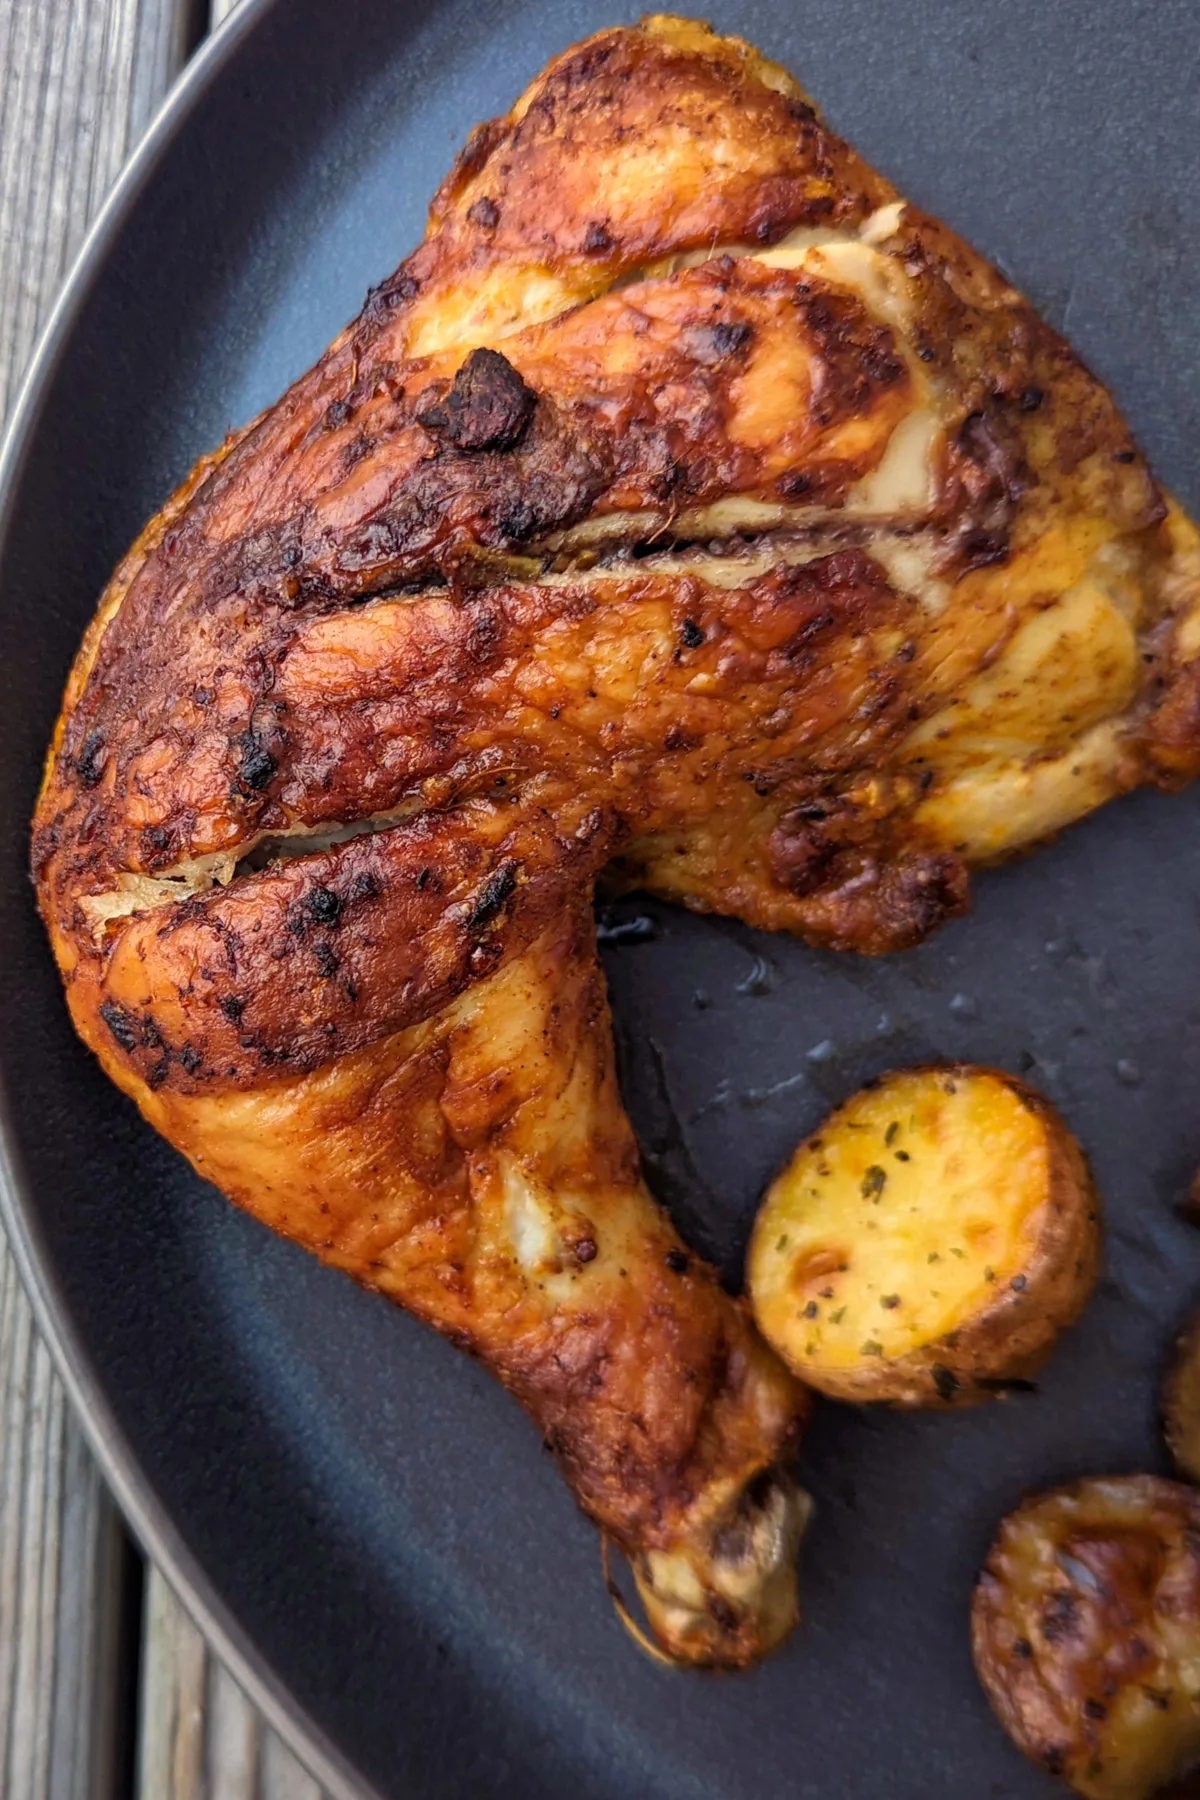 Baked tandoori chicken on a plate.